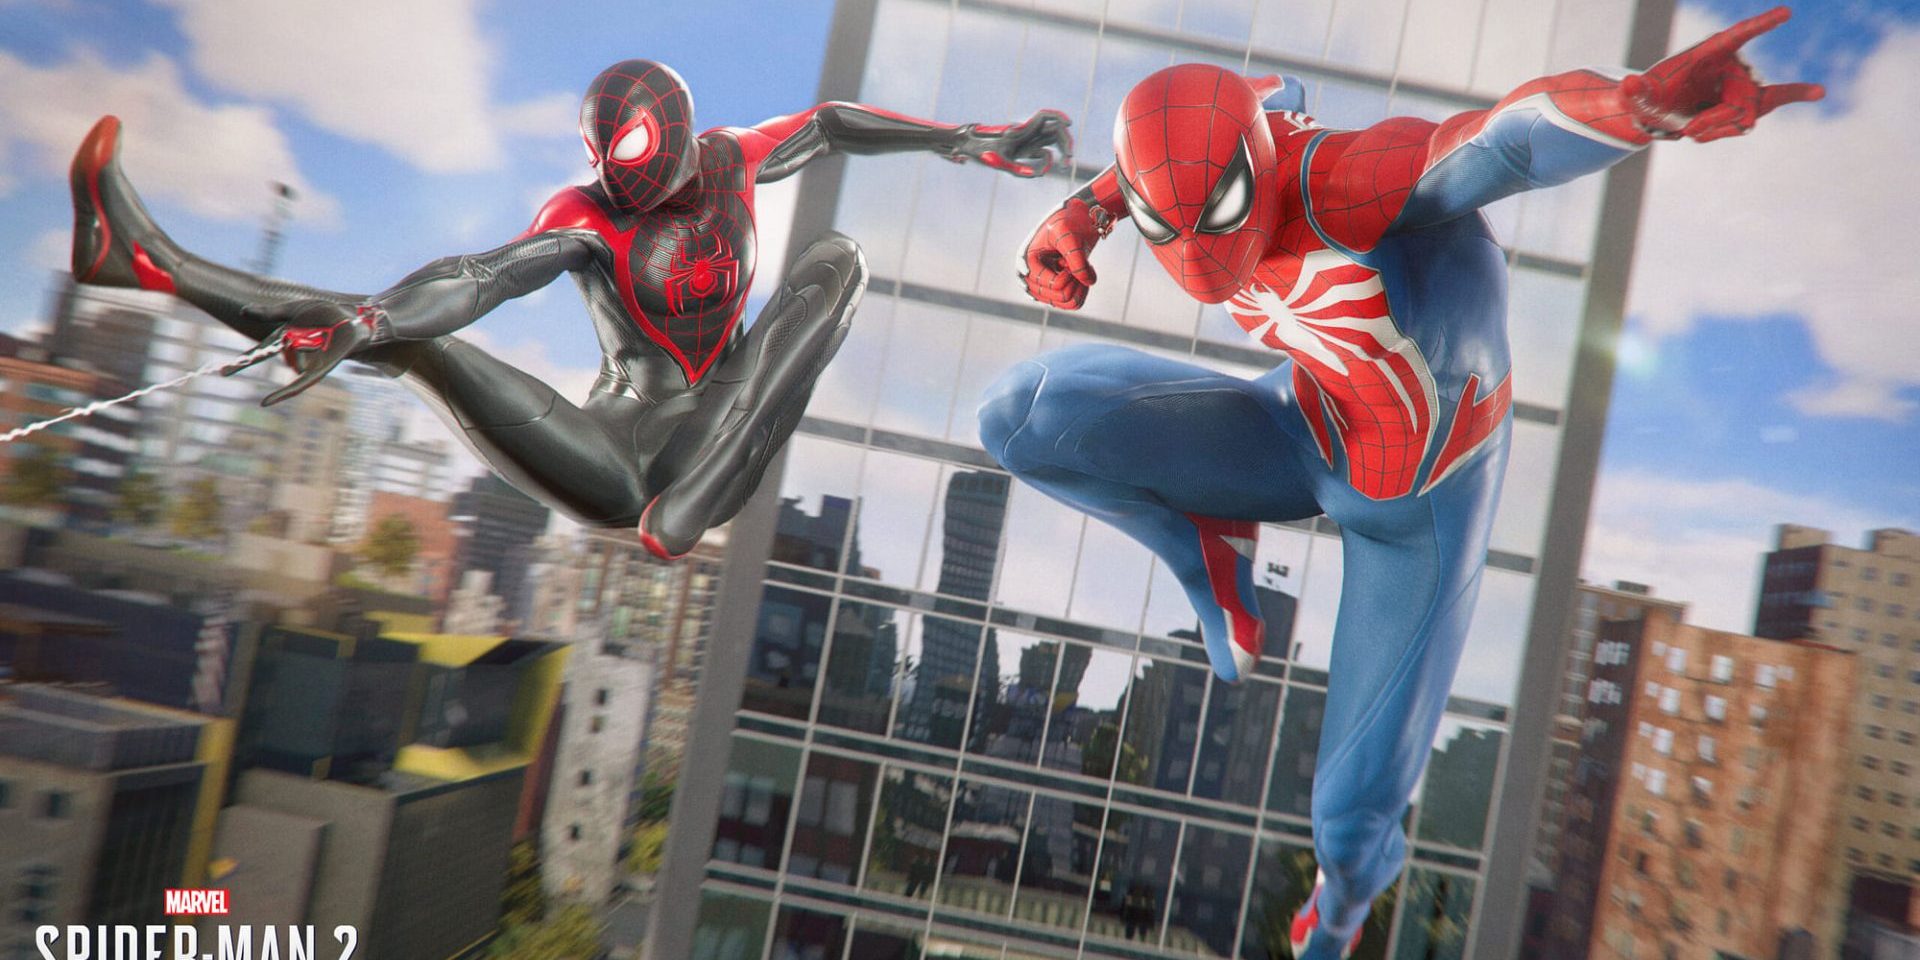 Marvel’s Spider-Man 2 Price and Pre-order Bonuses